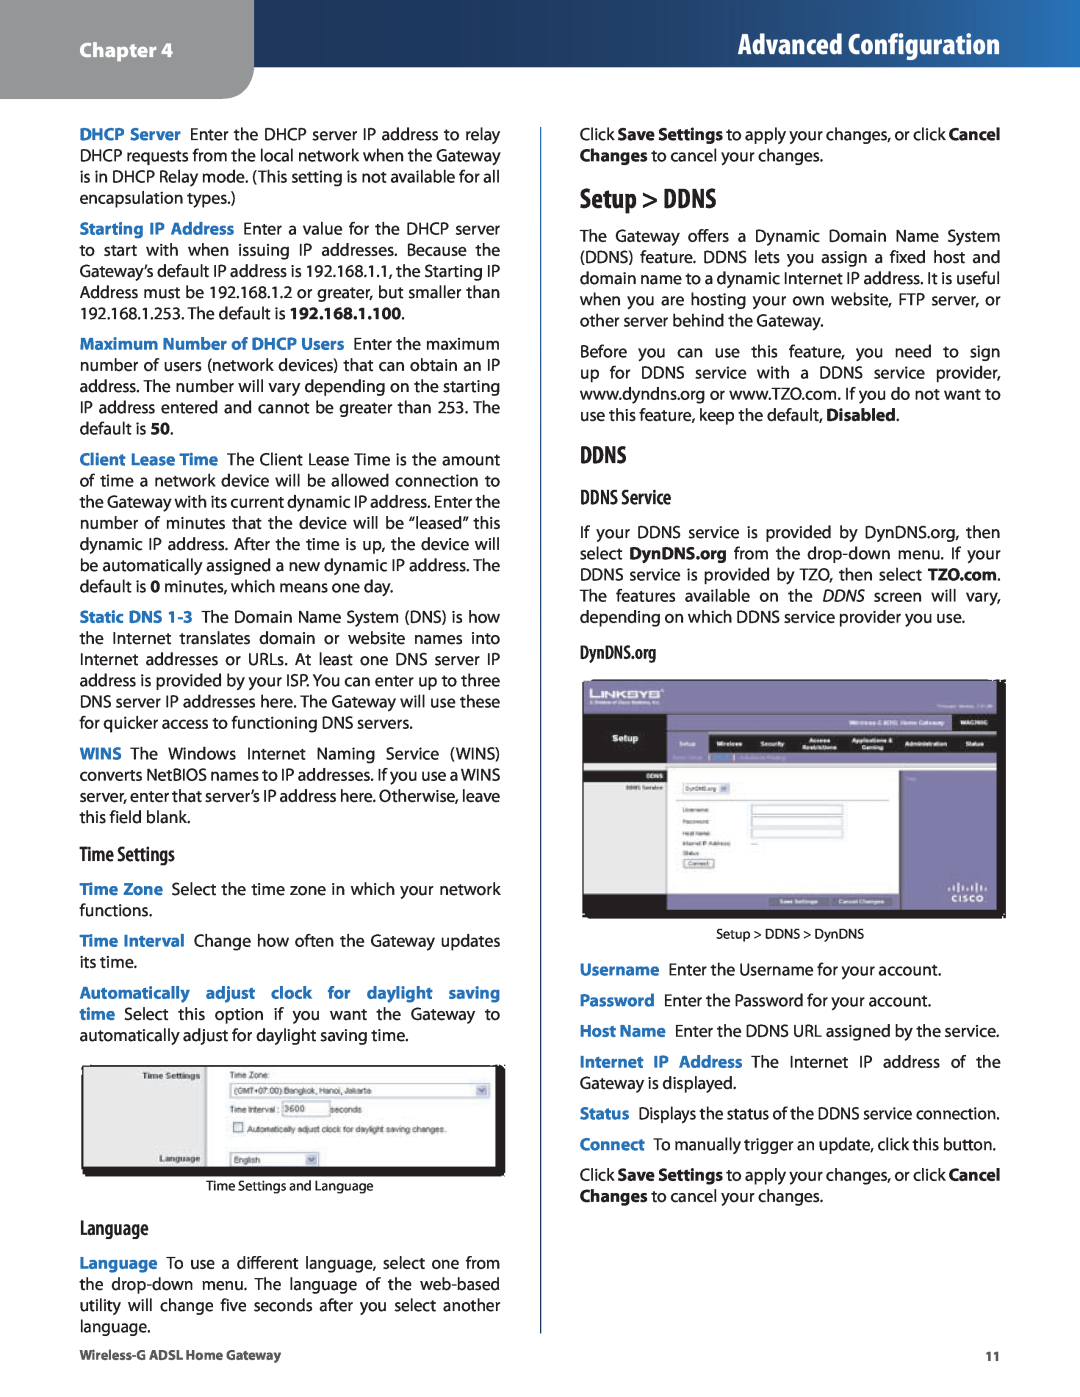 Linksys WAG200G manual Setup DDNS, Ddns, Time Settings, Language, DDNS Service, DynDNS.org, Advanced Configuration, Chapter 